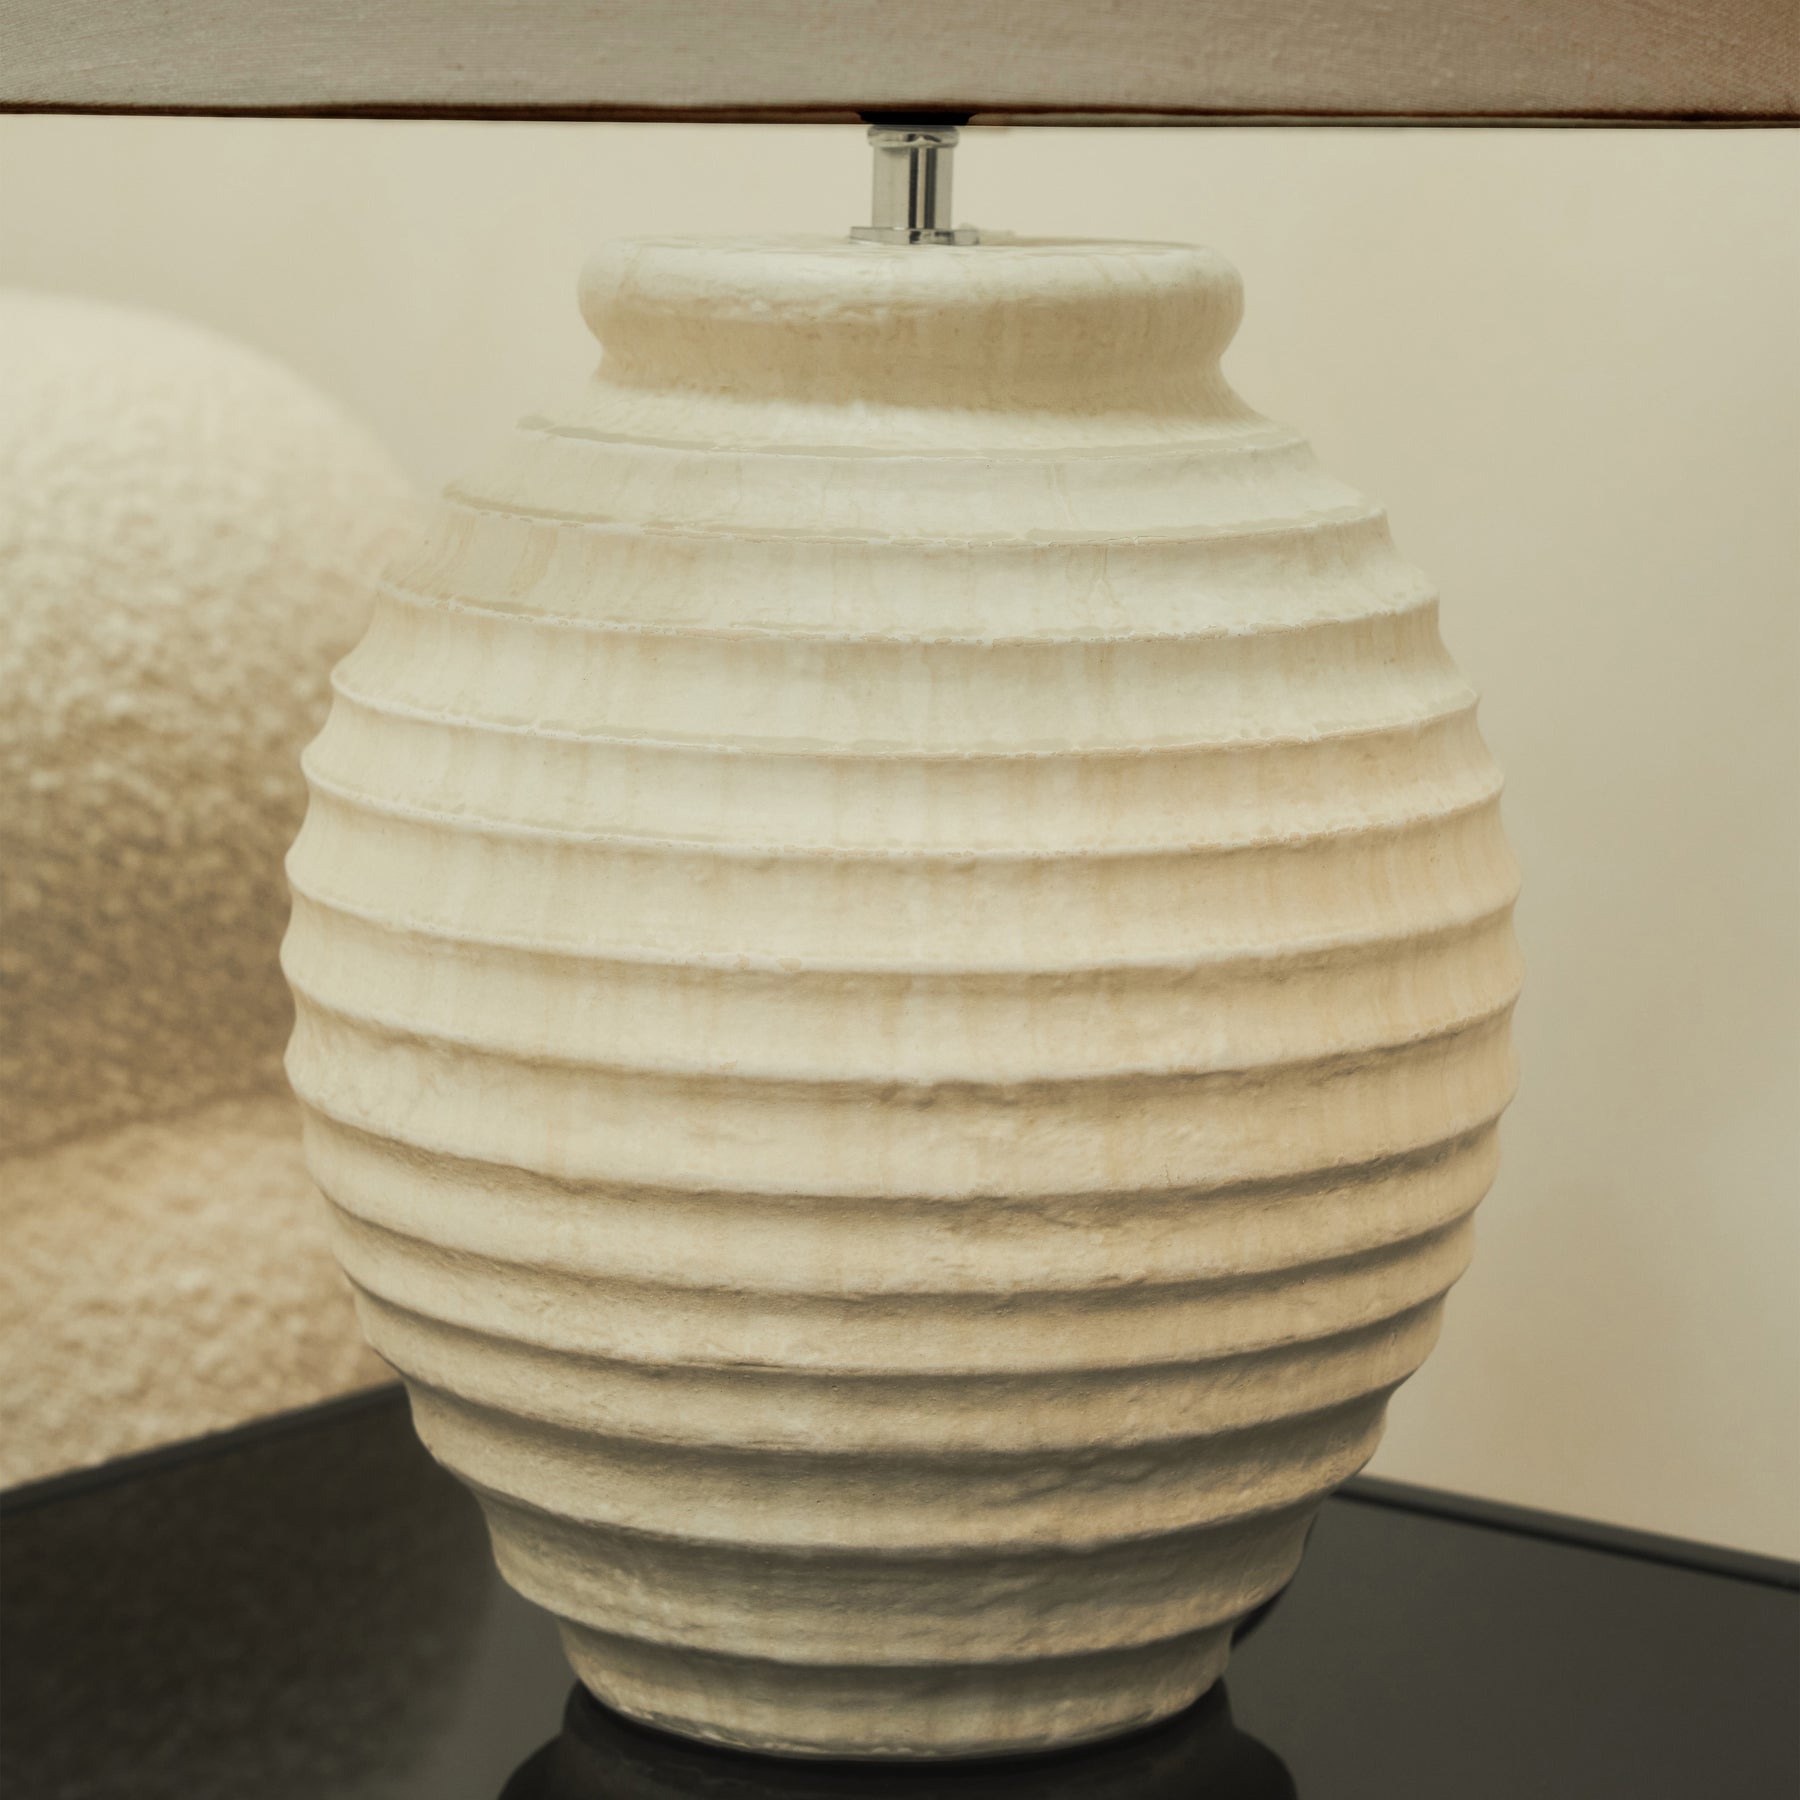 Linosa - Textured Ceramic Based Table Lamp Beige Shade